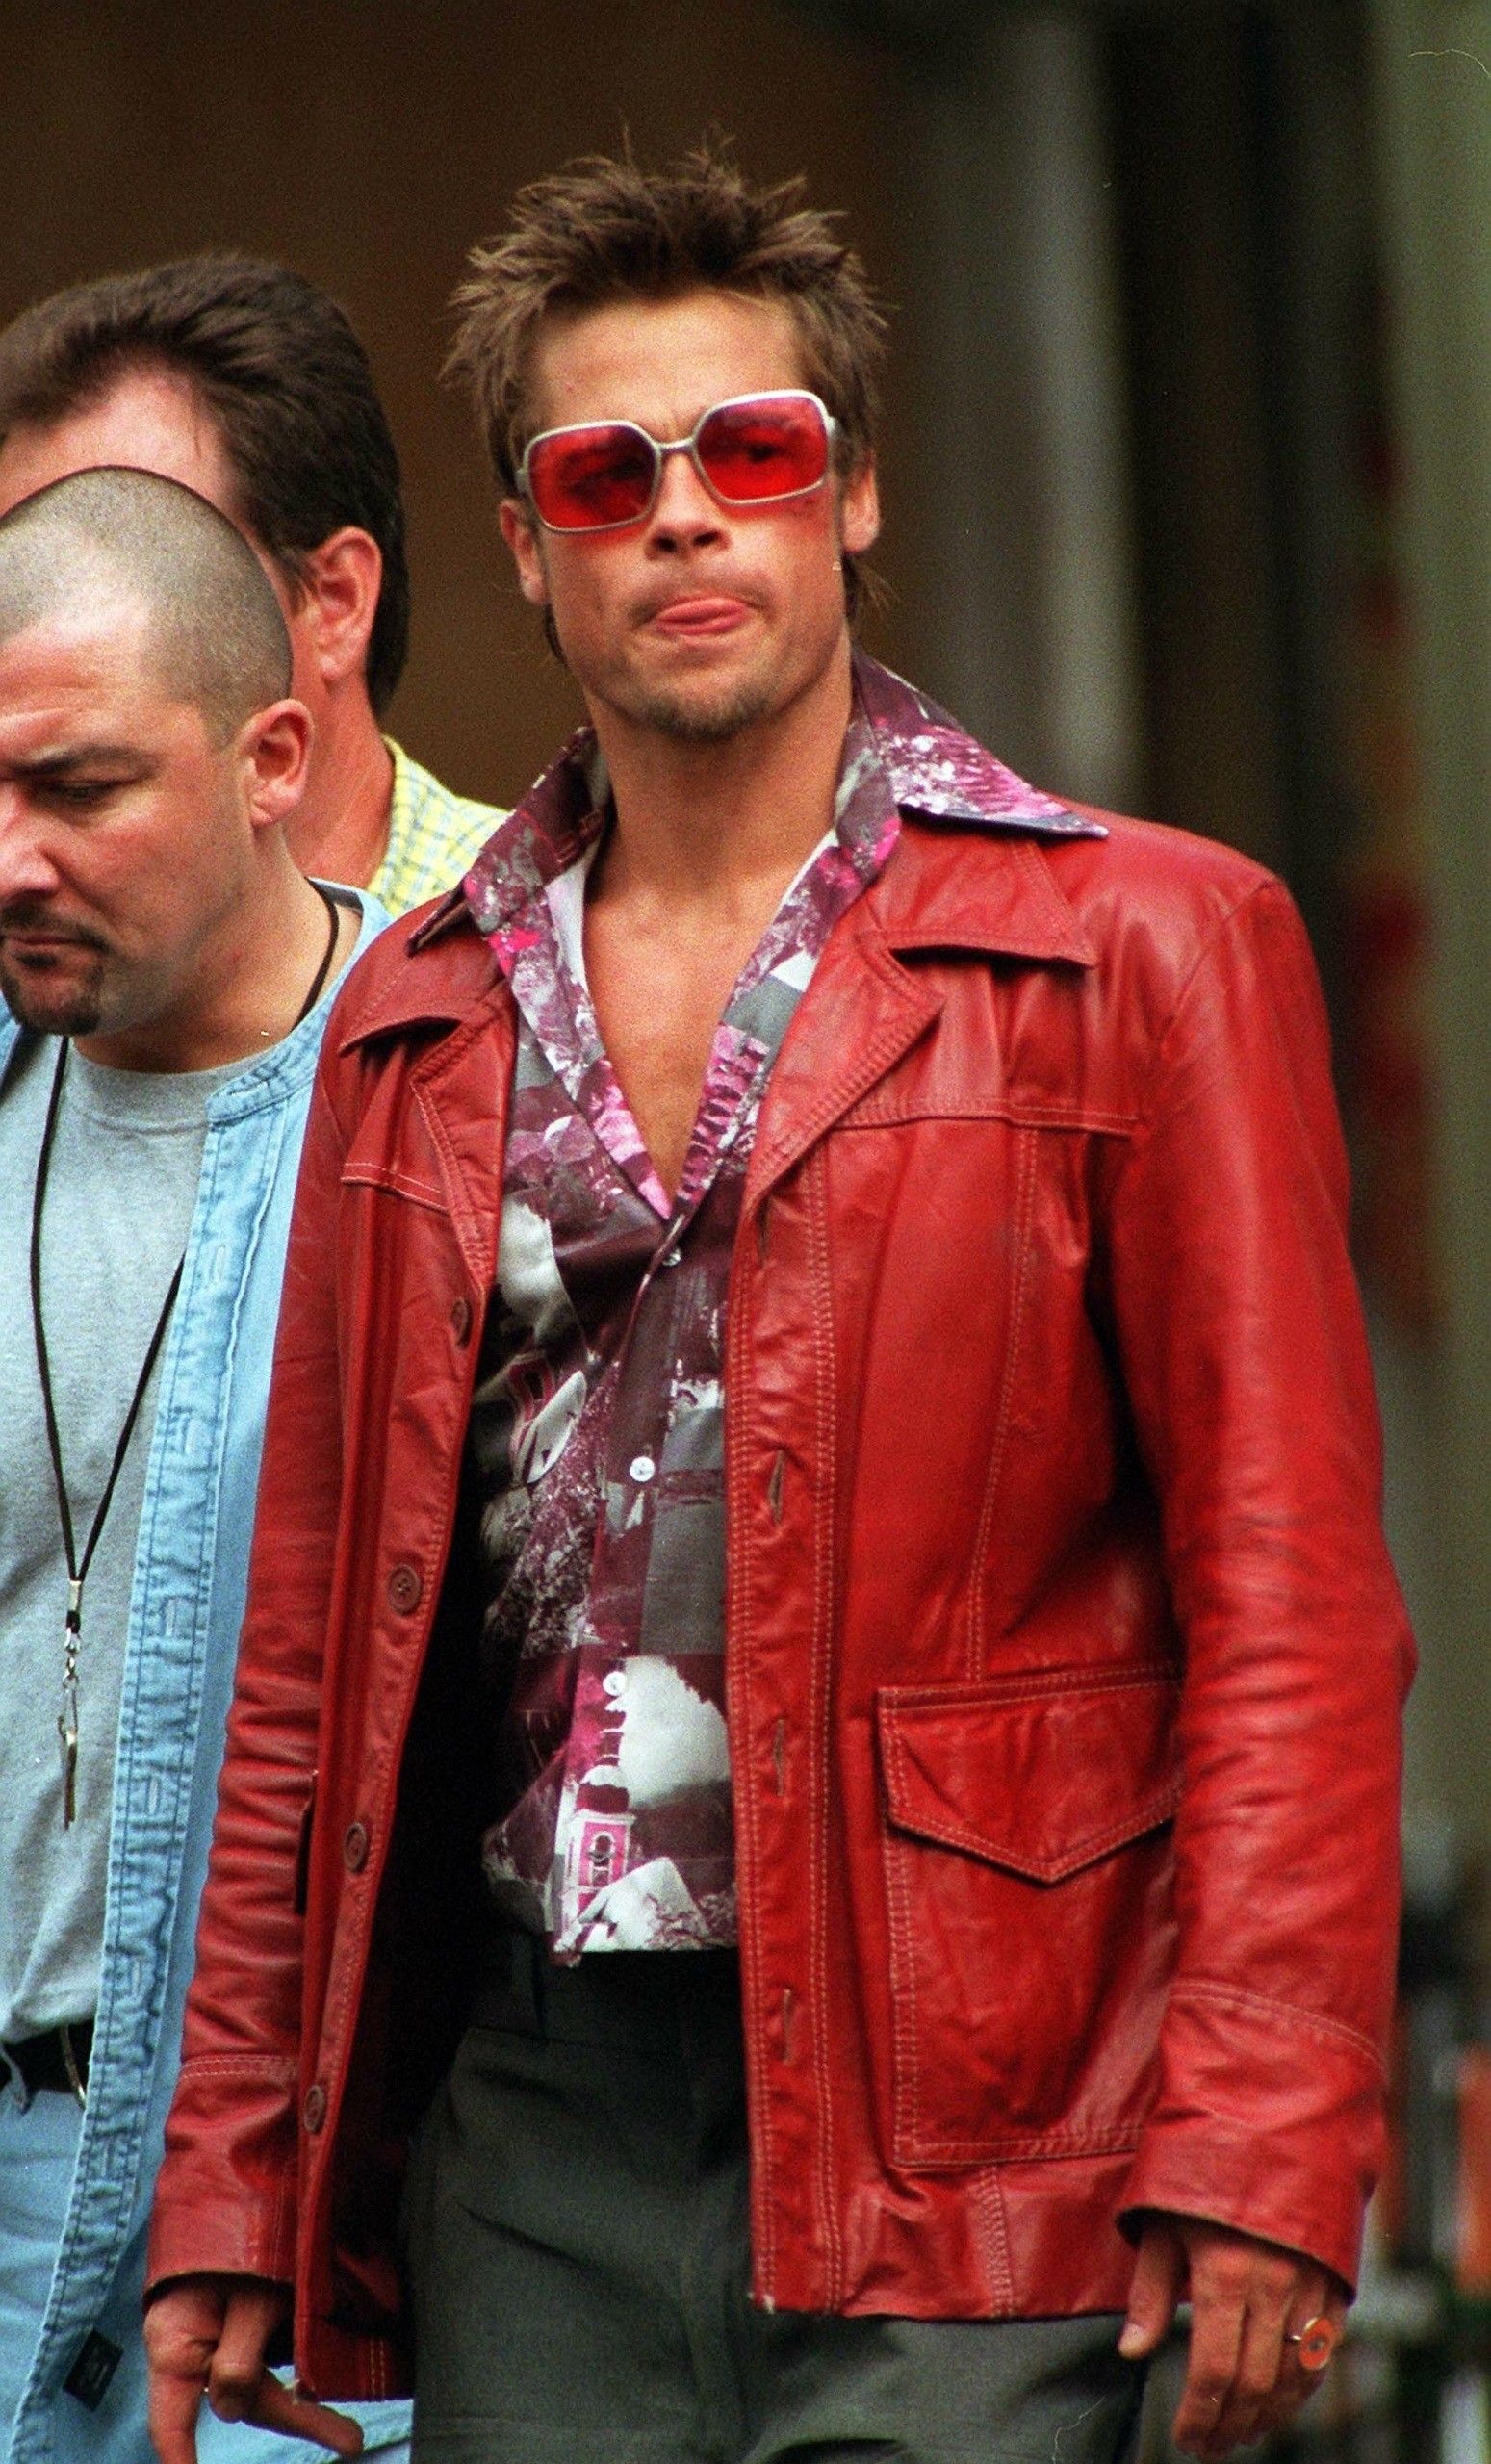 Tyler Durden Image On Set August 11 1998 HD Wallpaper And Background Photo. Fight Club Brad Pitt, Celebrities Leather Jacket, Brad Pitt